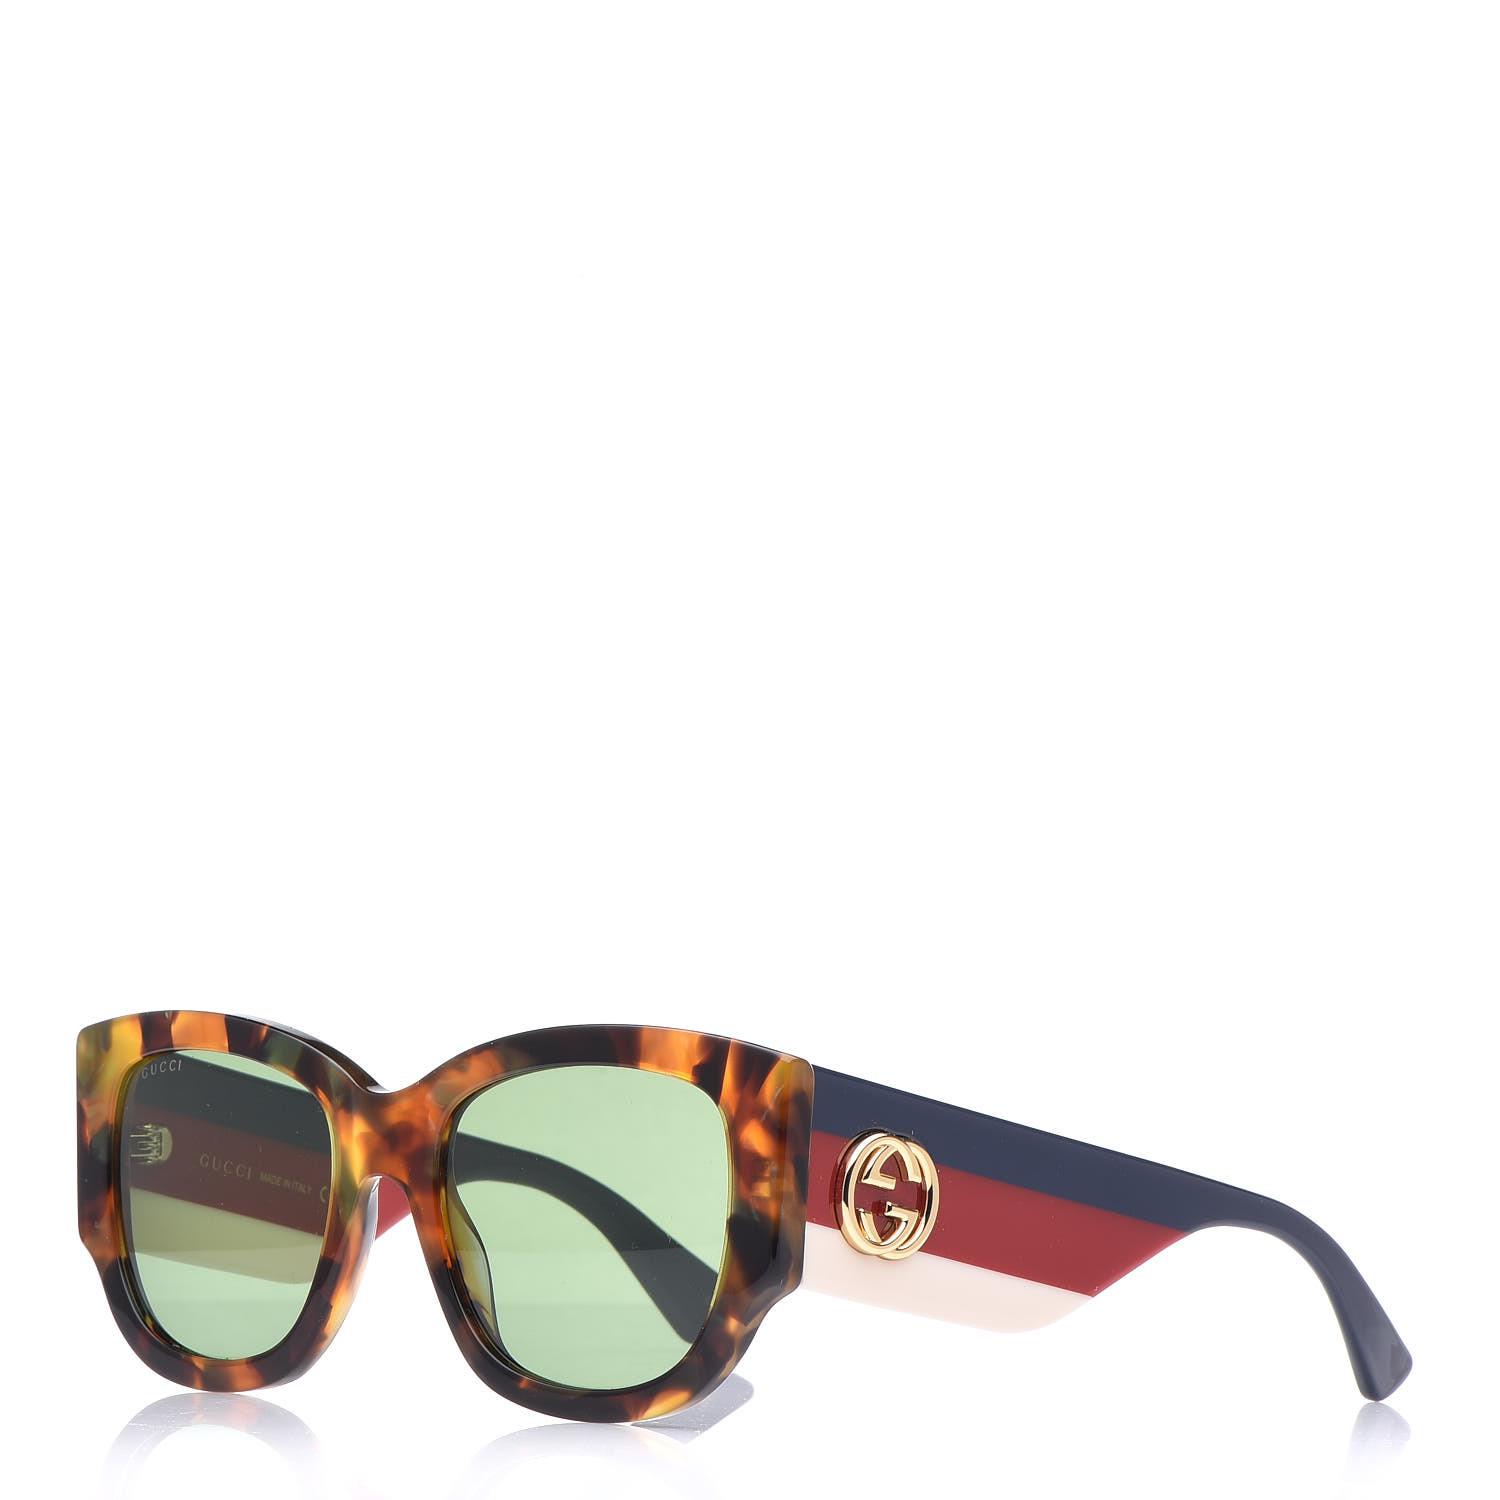 Gucci Acetate Oversized Rectangle Frame Web Sunglasses Gg 0276s Tortoiseshell 421501 Fashionphile 